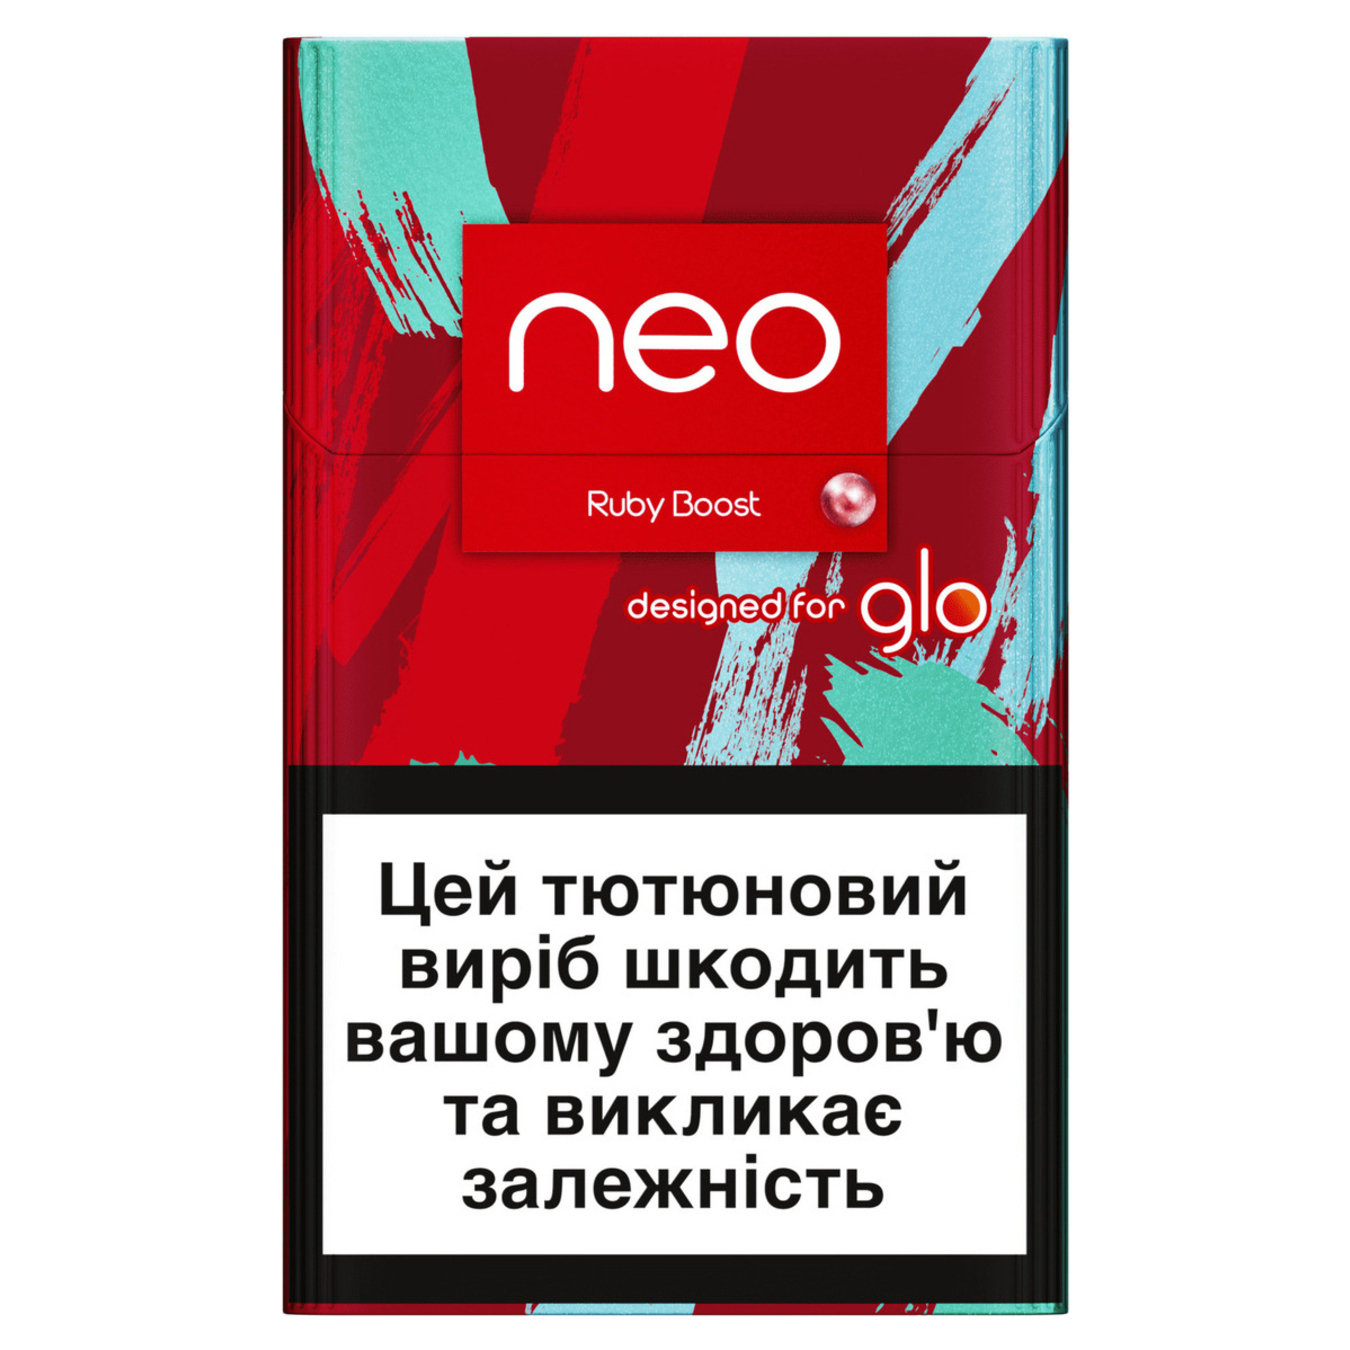 Стики Neo Demi Redberry Pastel для нагрева табака 20шт (цена указана без акциза)